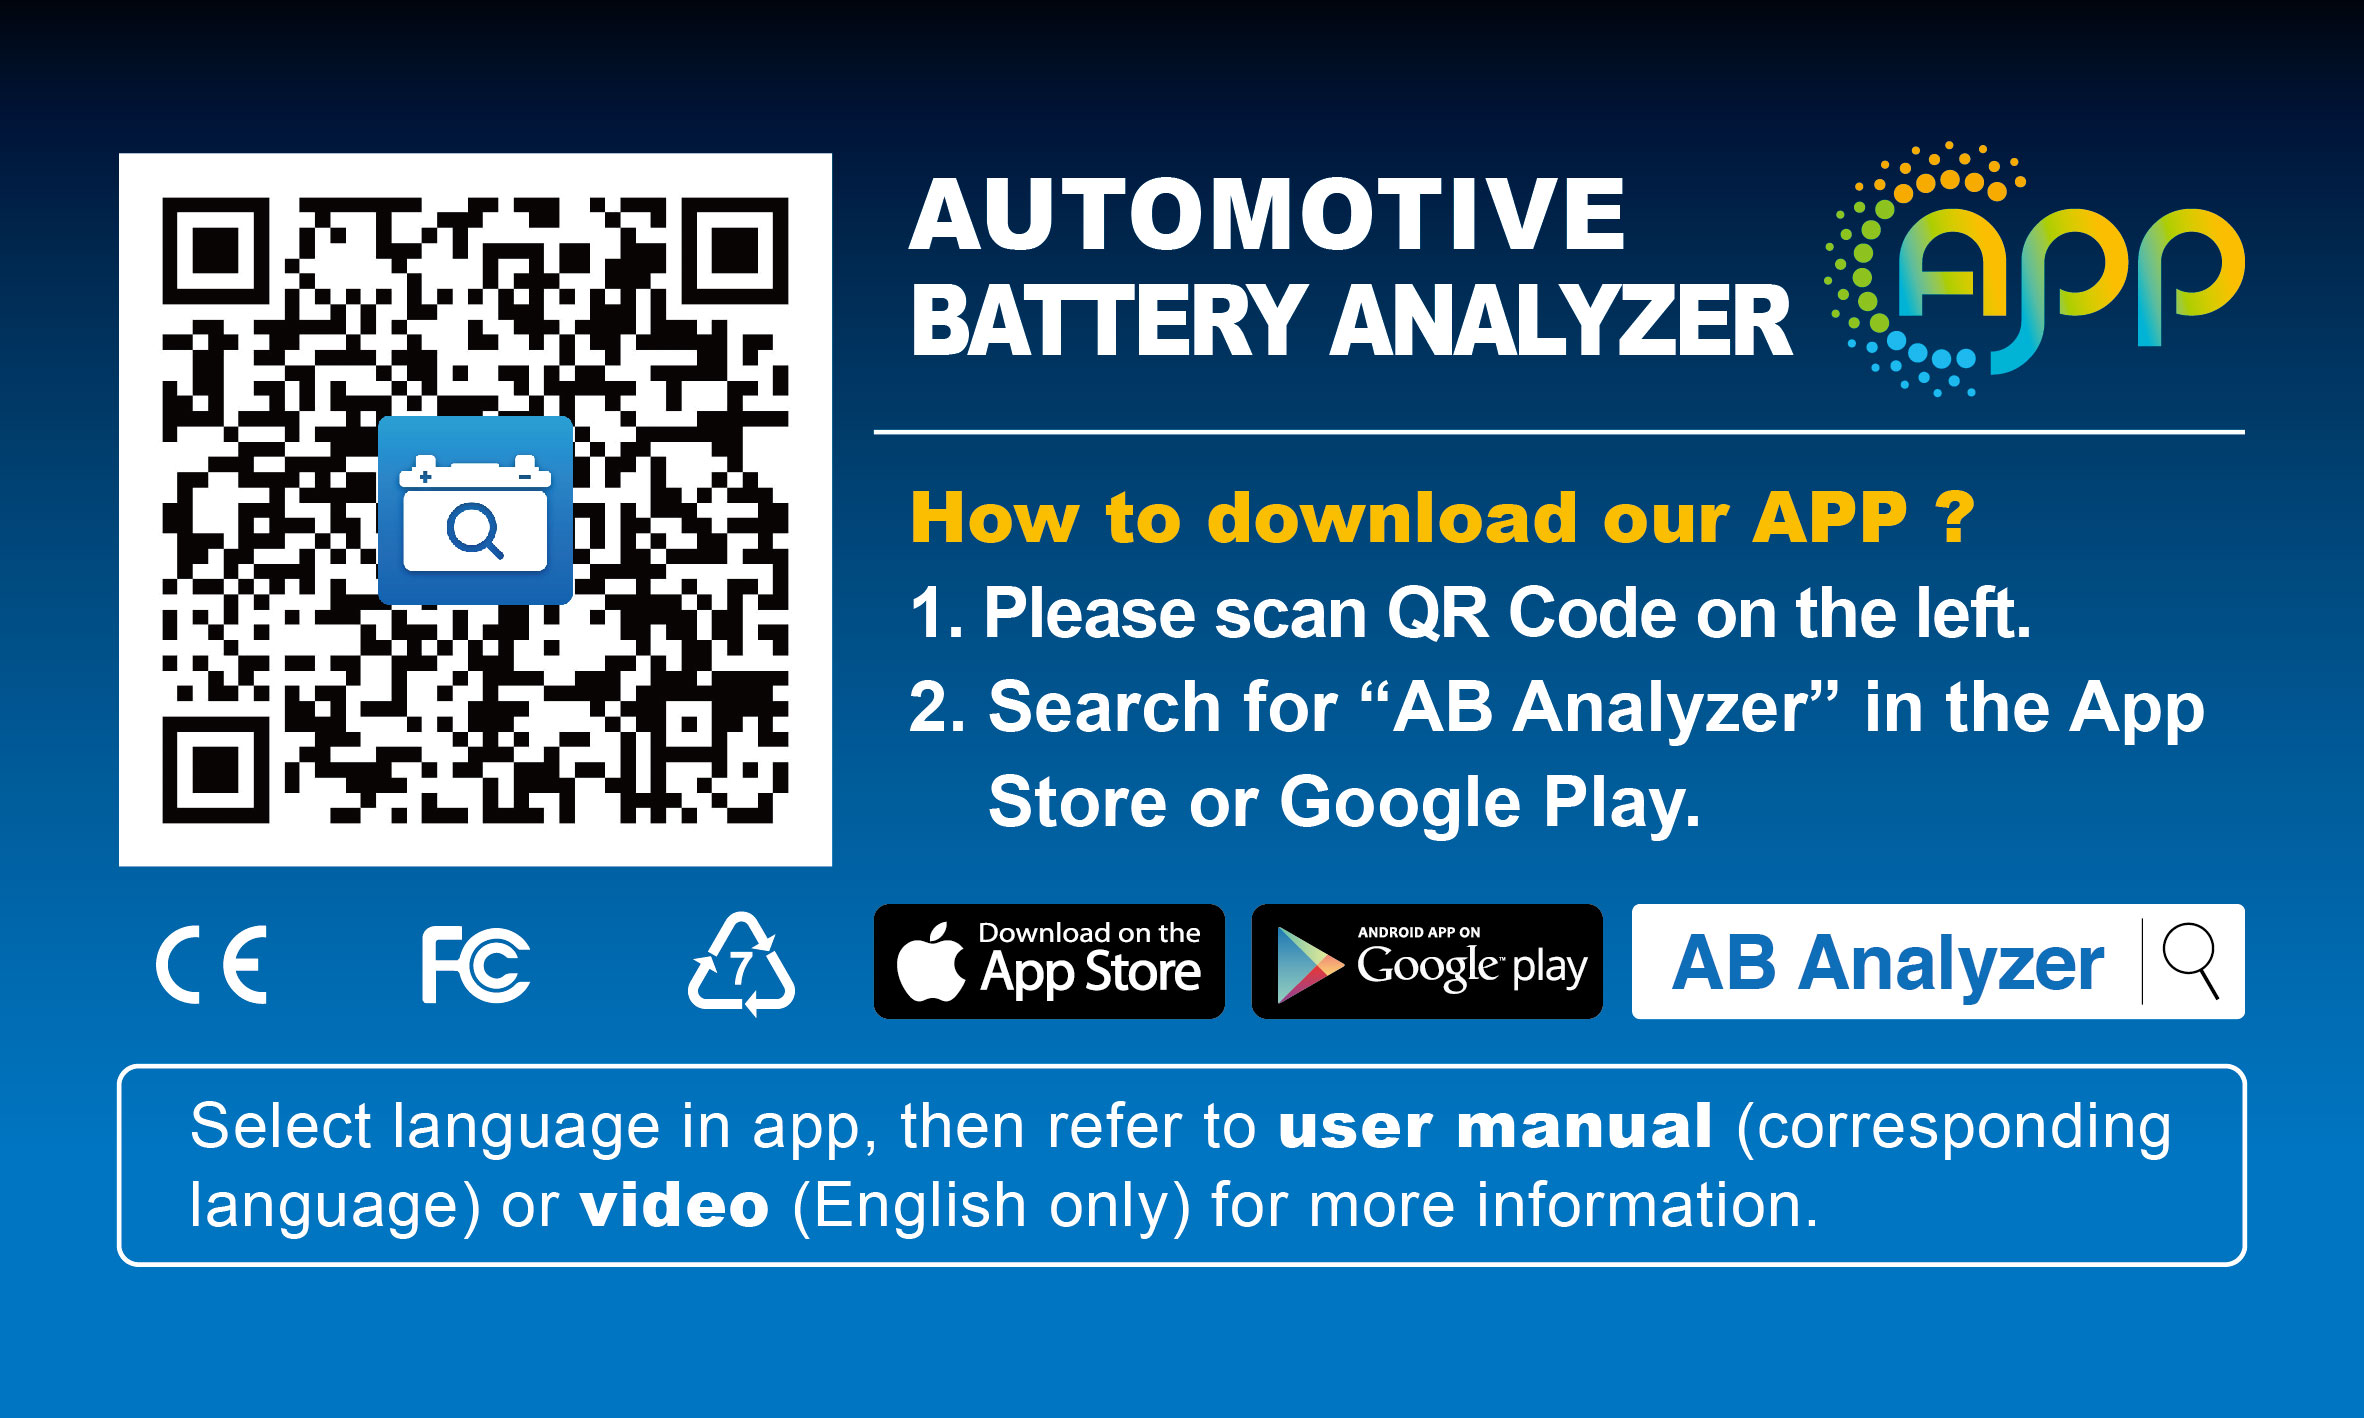 AB Analyzer - How to Download App